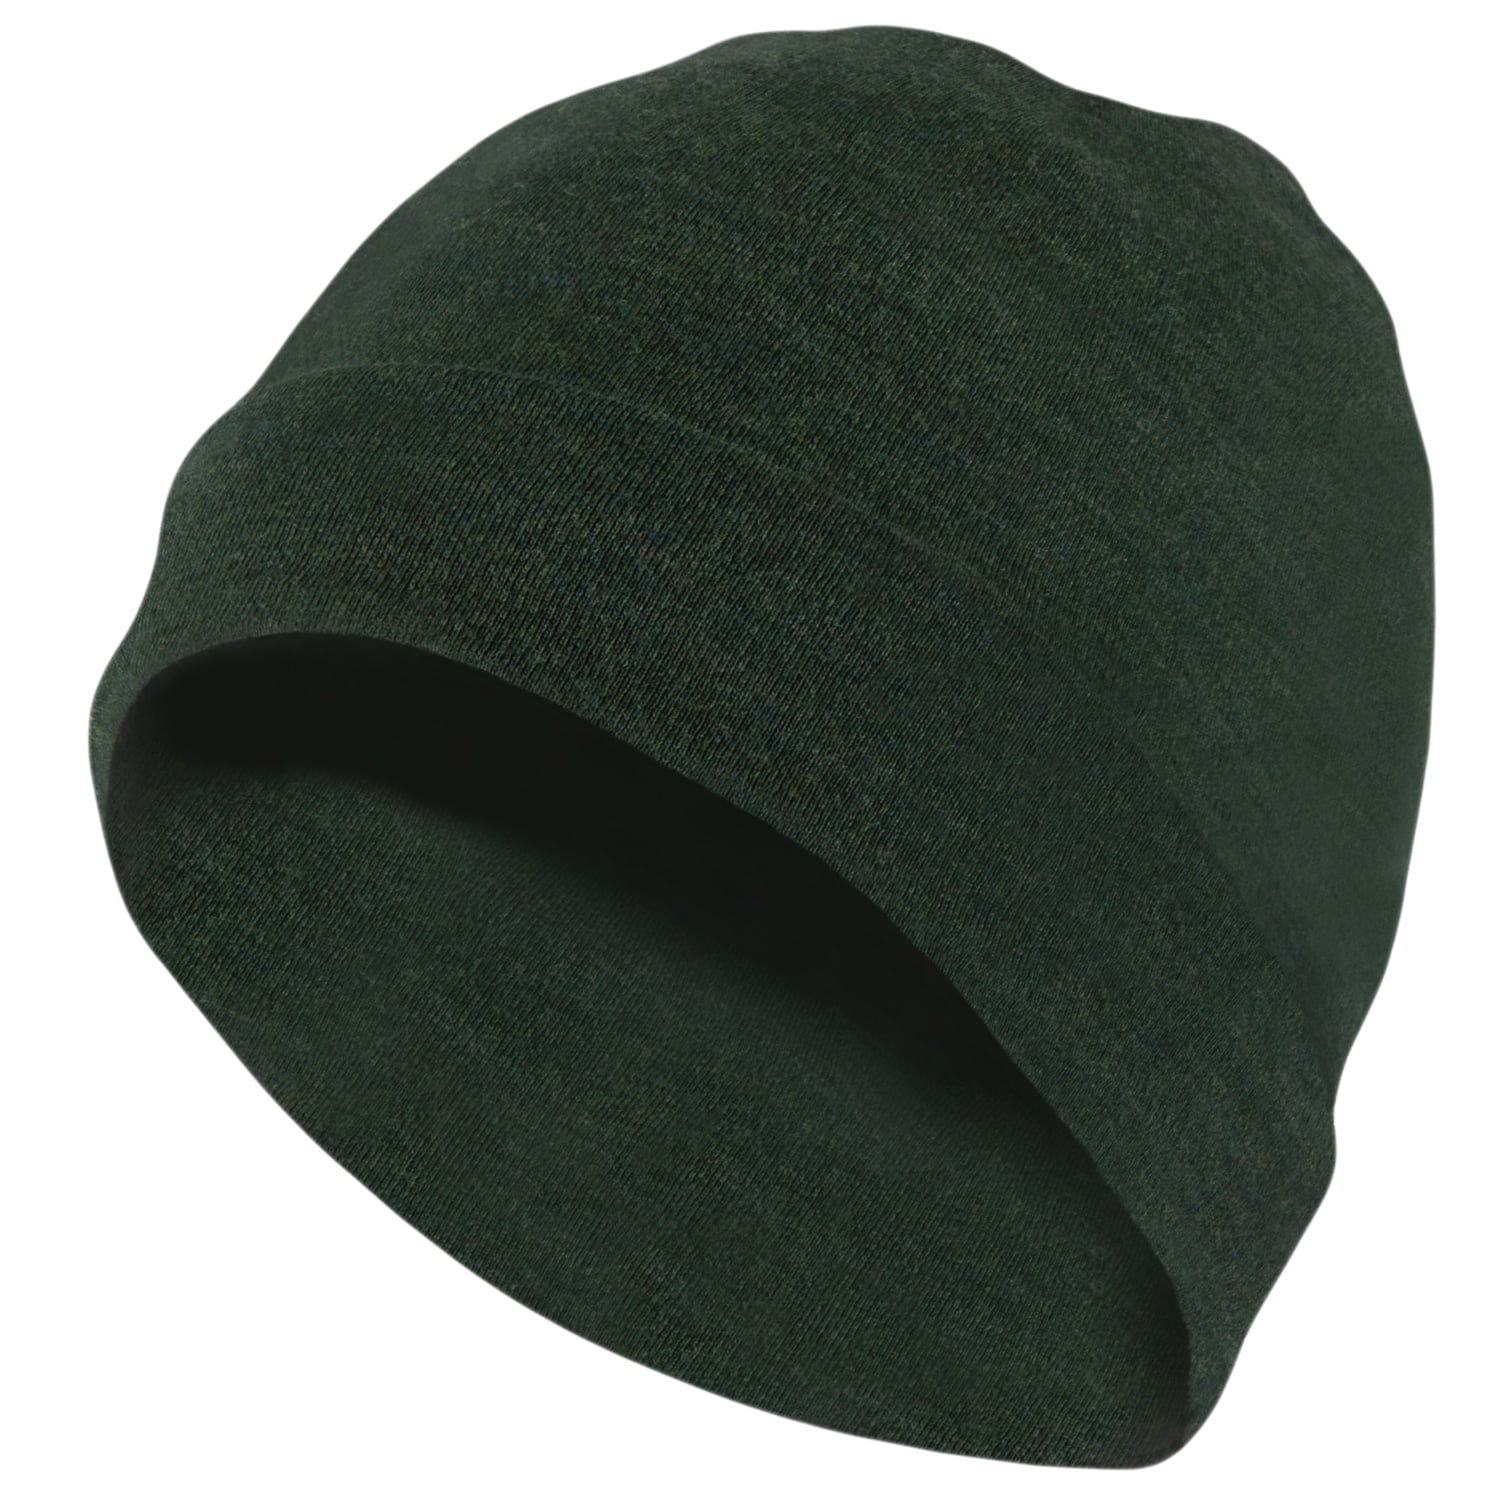 MERIWOOL Merino Wool Unisex Cuff Beanie Hat - Charcoal Gray